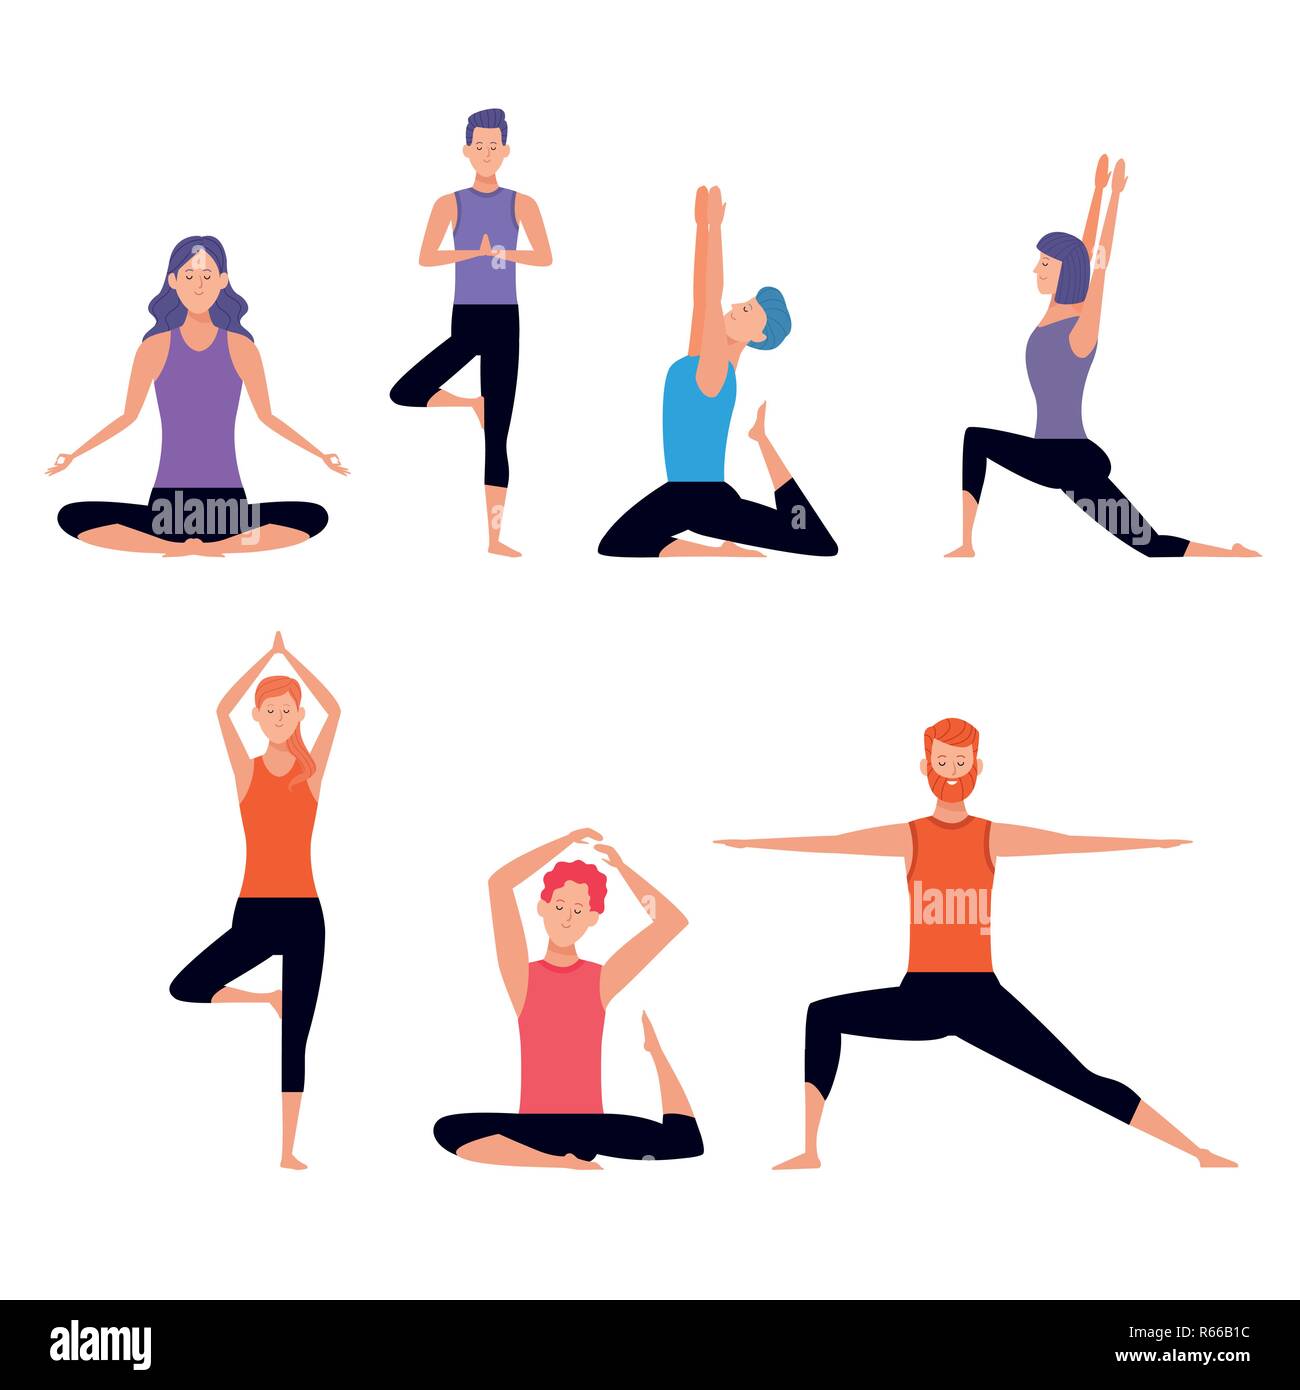 https://c8.alamy.com/comp/R66B1C/set-of-person-doing-yoga-poses-R66B1C.jpg